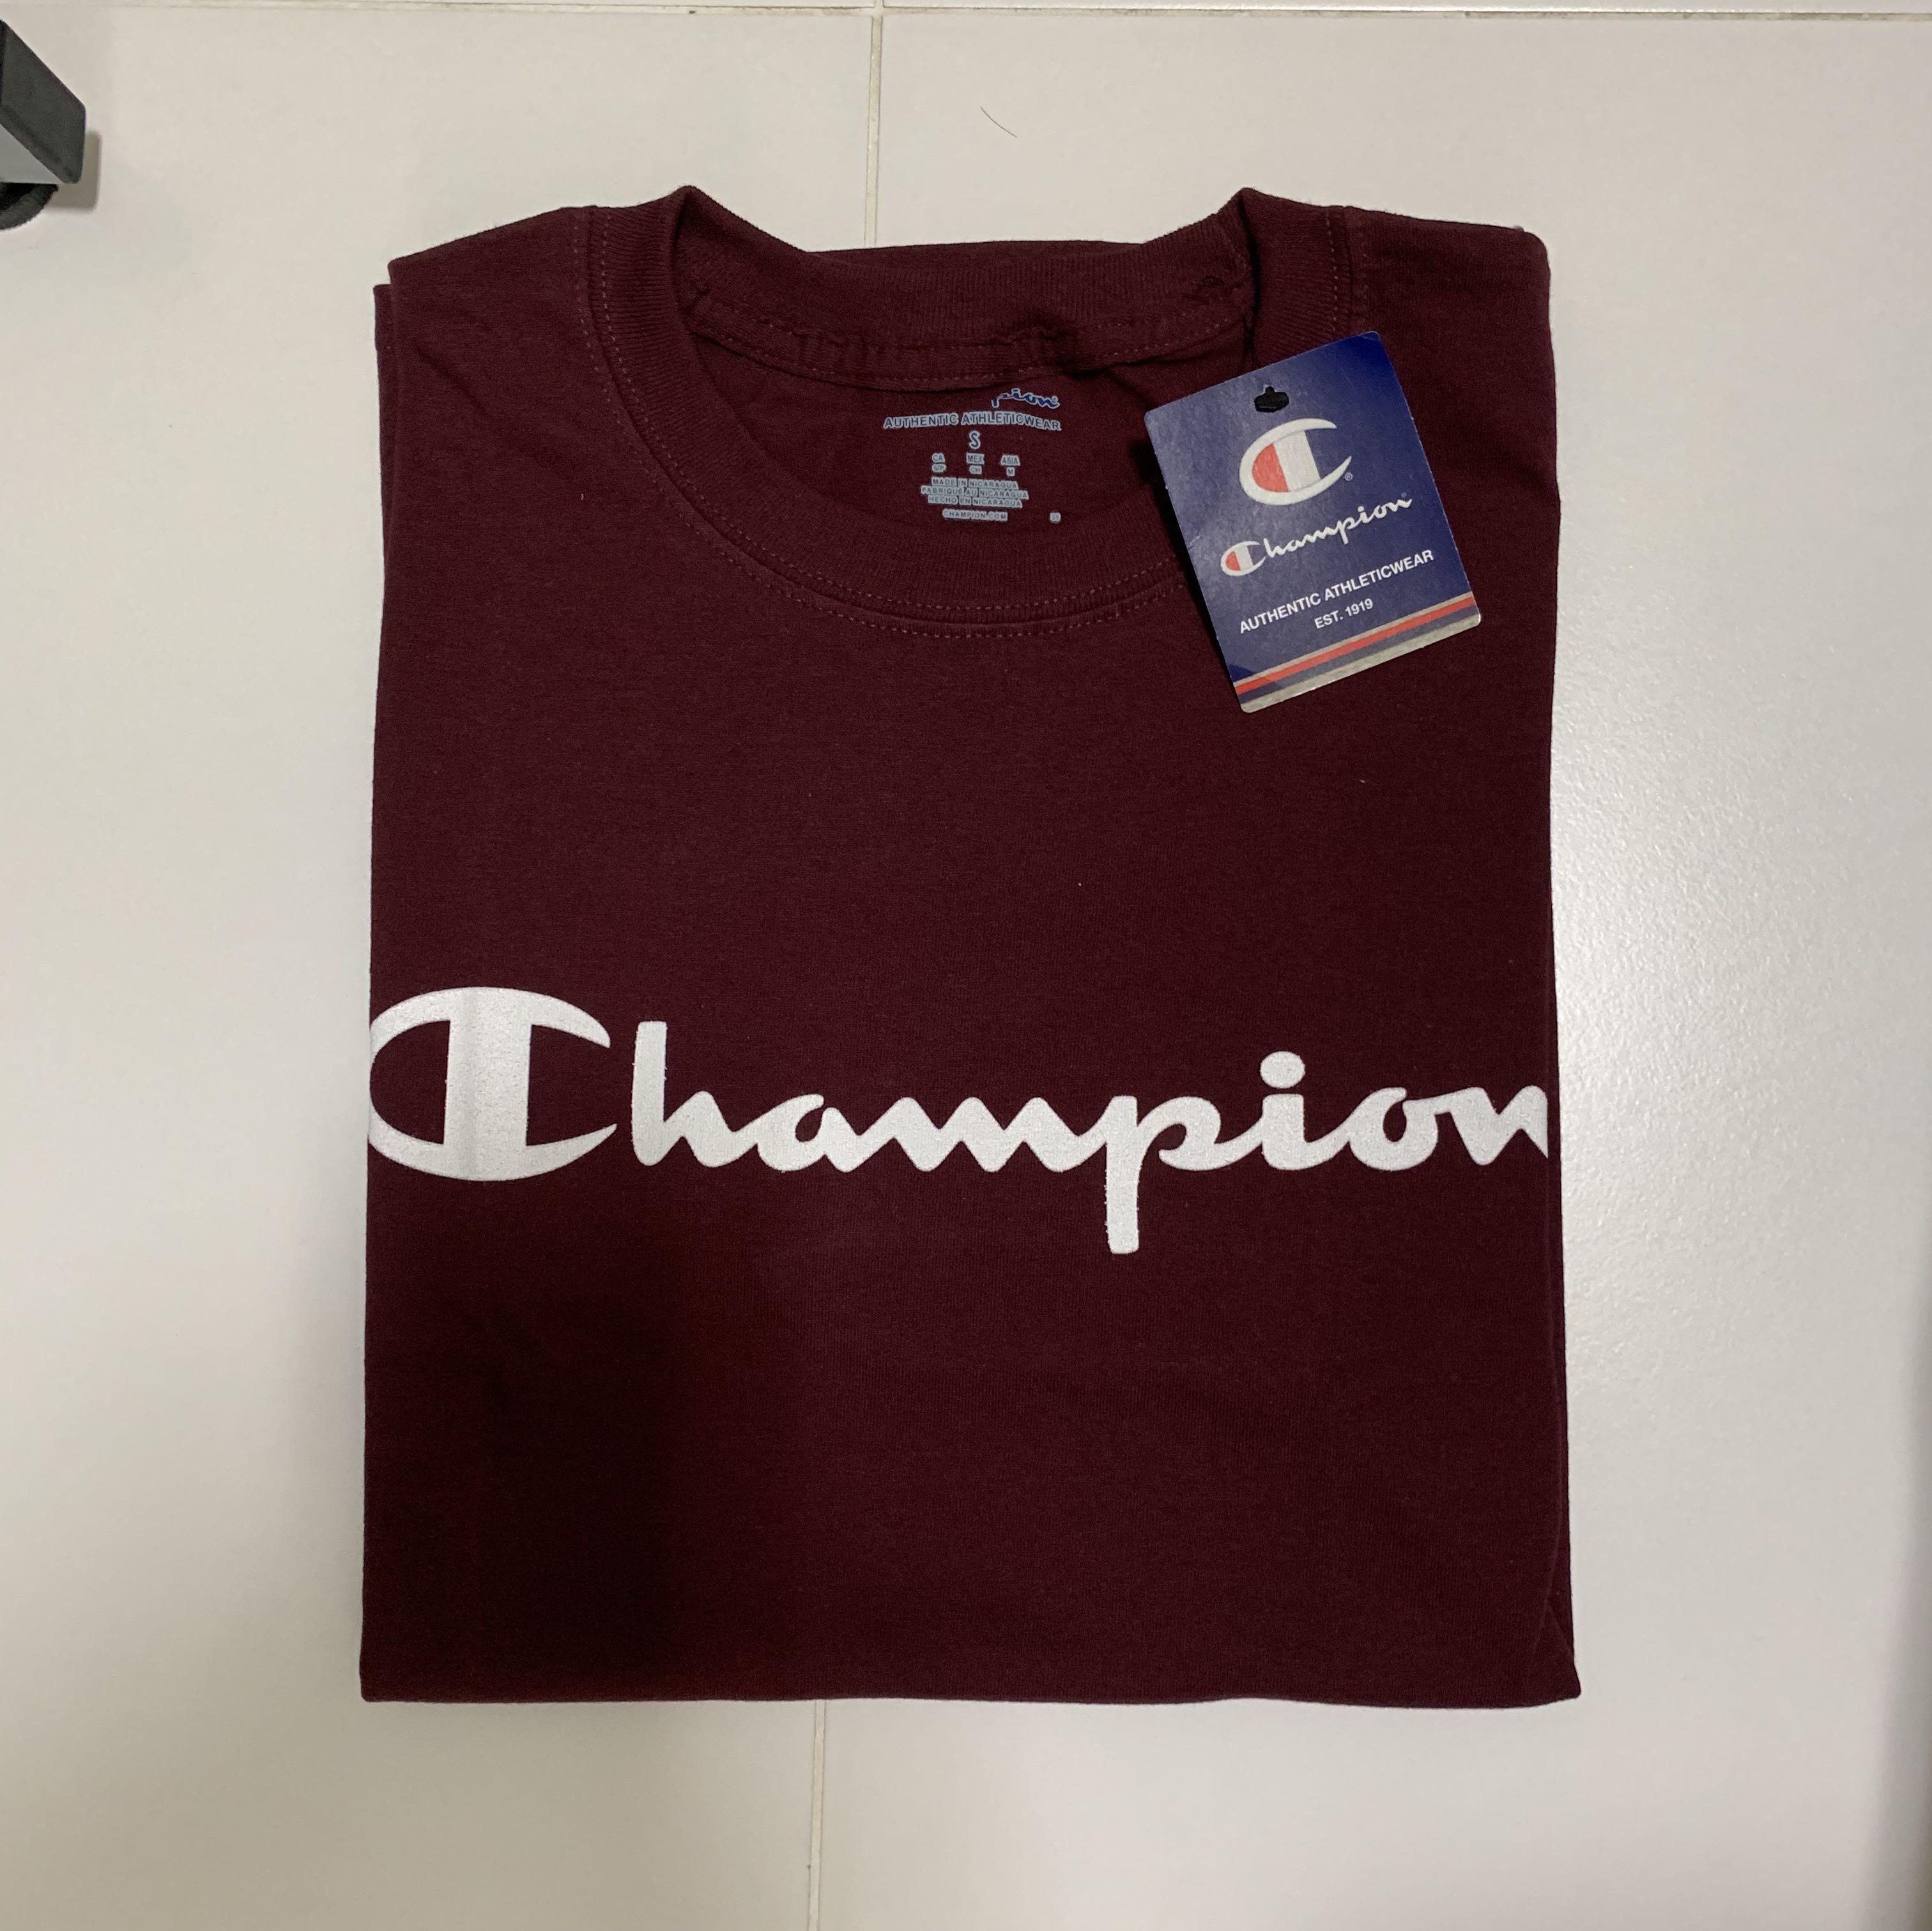 Instock] Champion t Shirts, Men's 